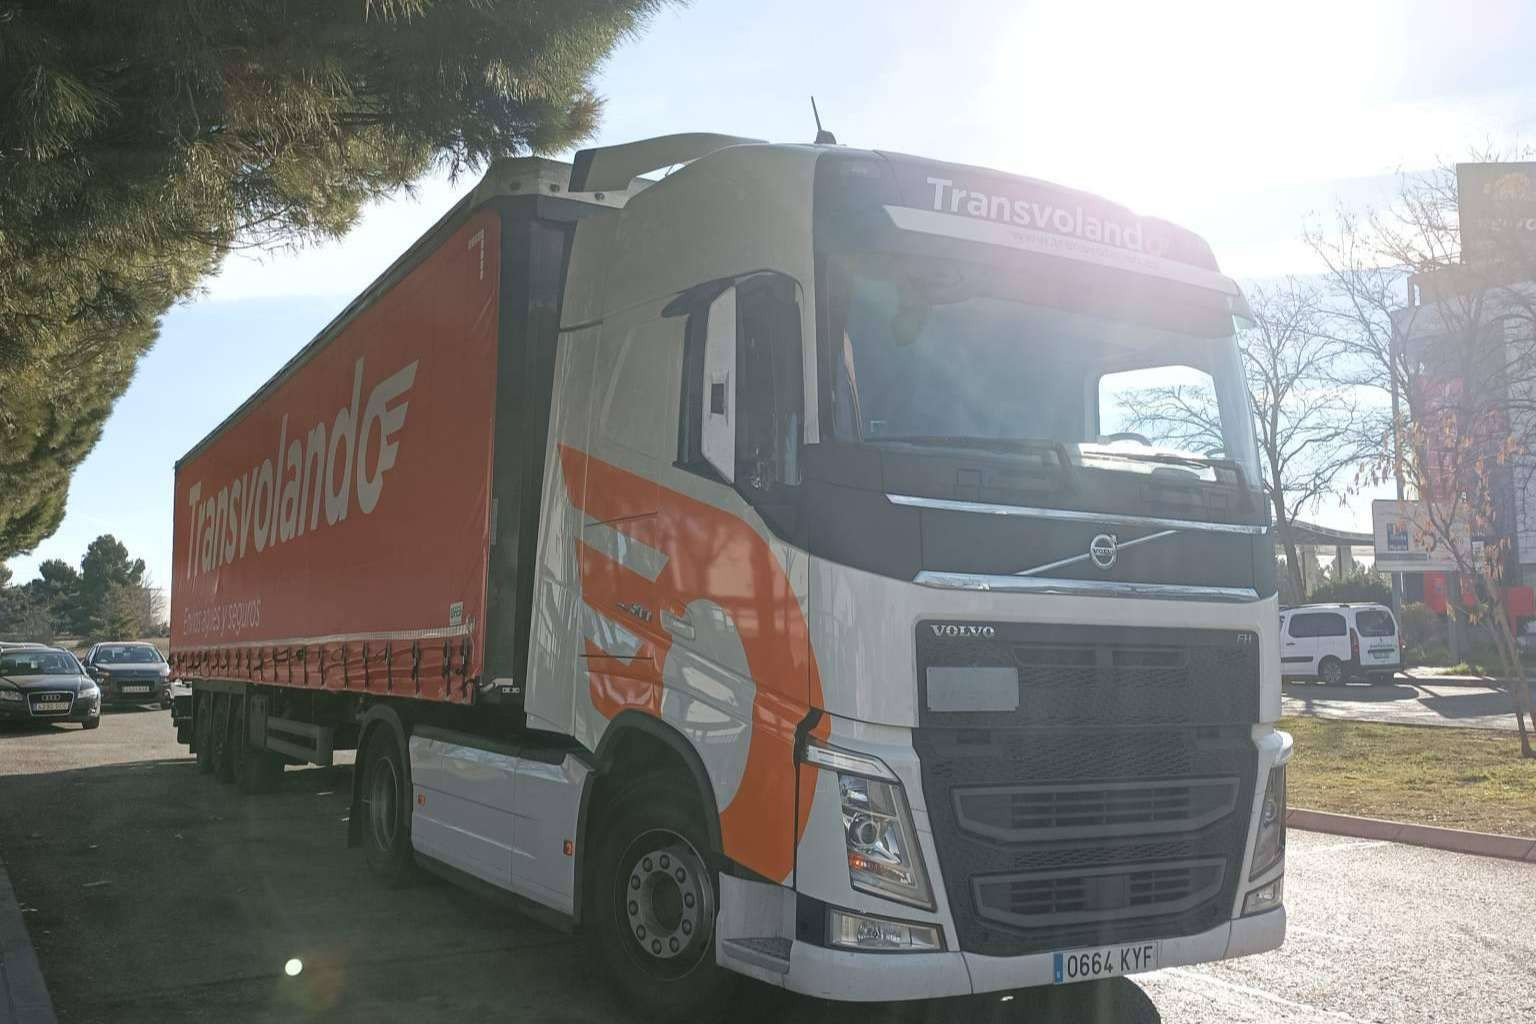  Servicio de transporte especial por carretera a toda España, a través de Transvolando 